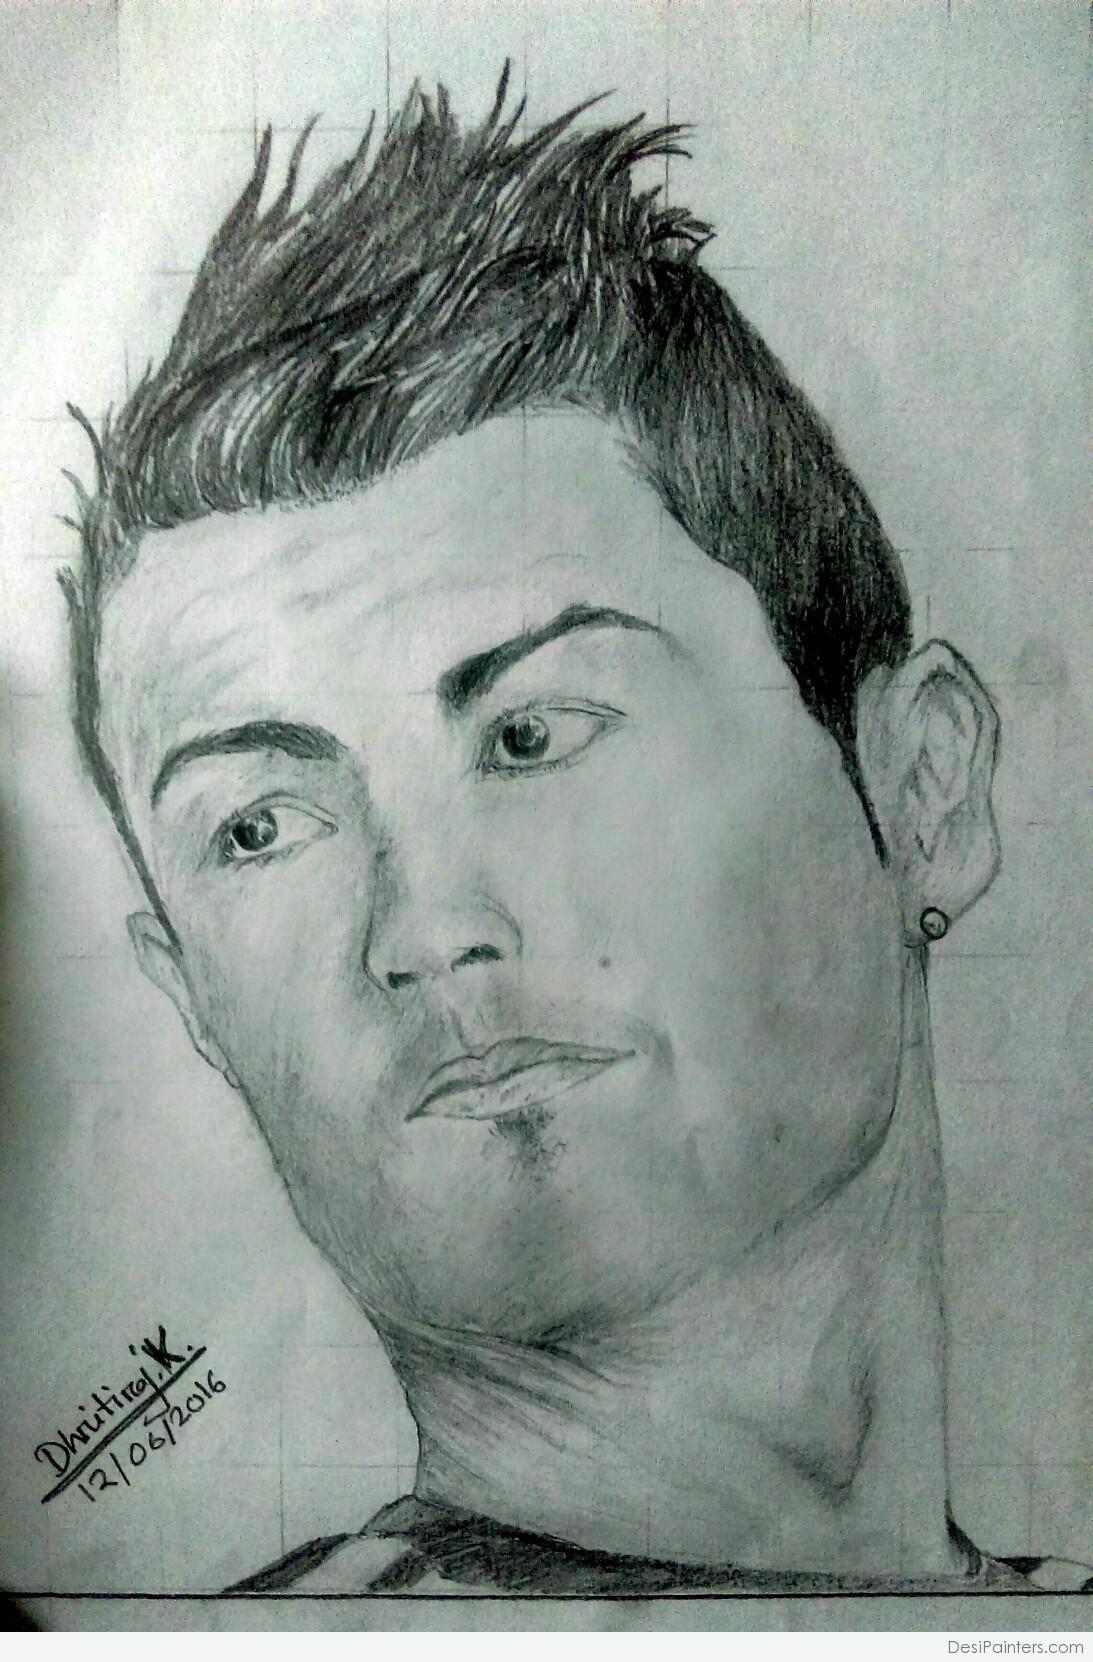 Cristiano Ronaldo's Sketch in 5 Simple Steps Easy Pencil Sketch Portrait  Tutorial #cr7 - YouTube